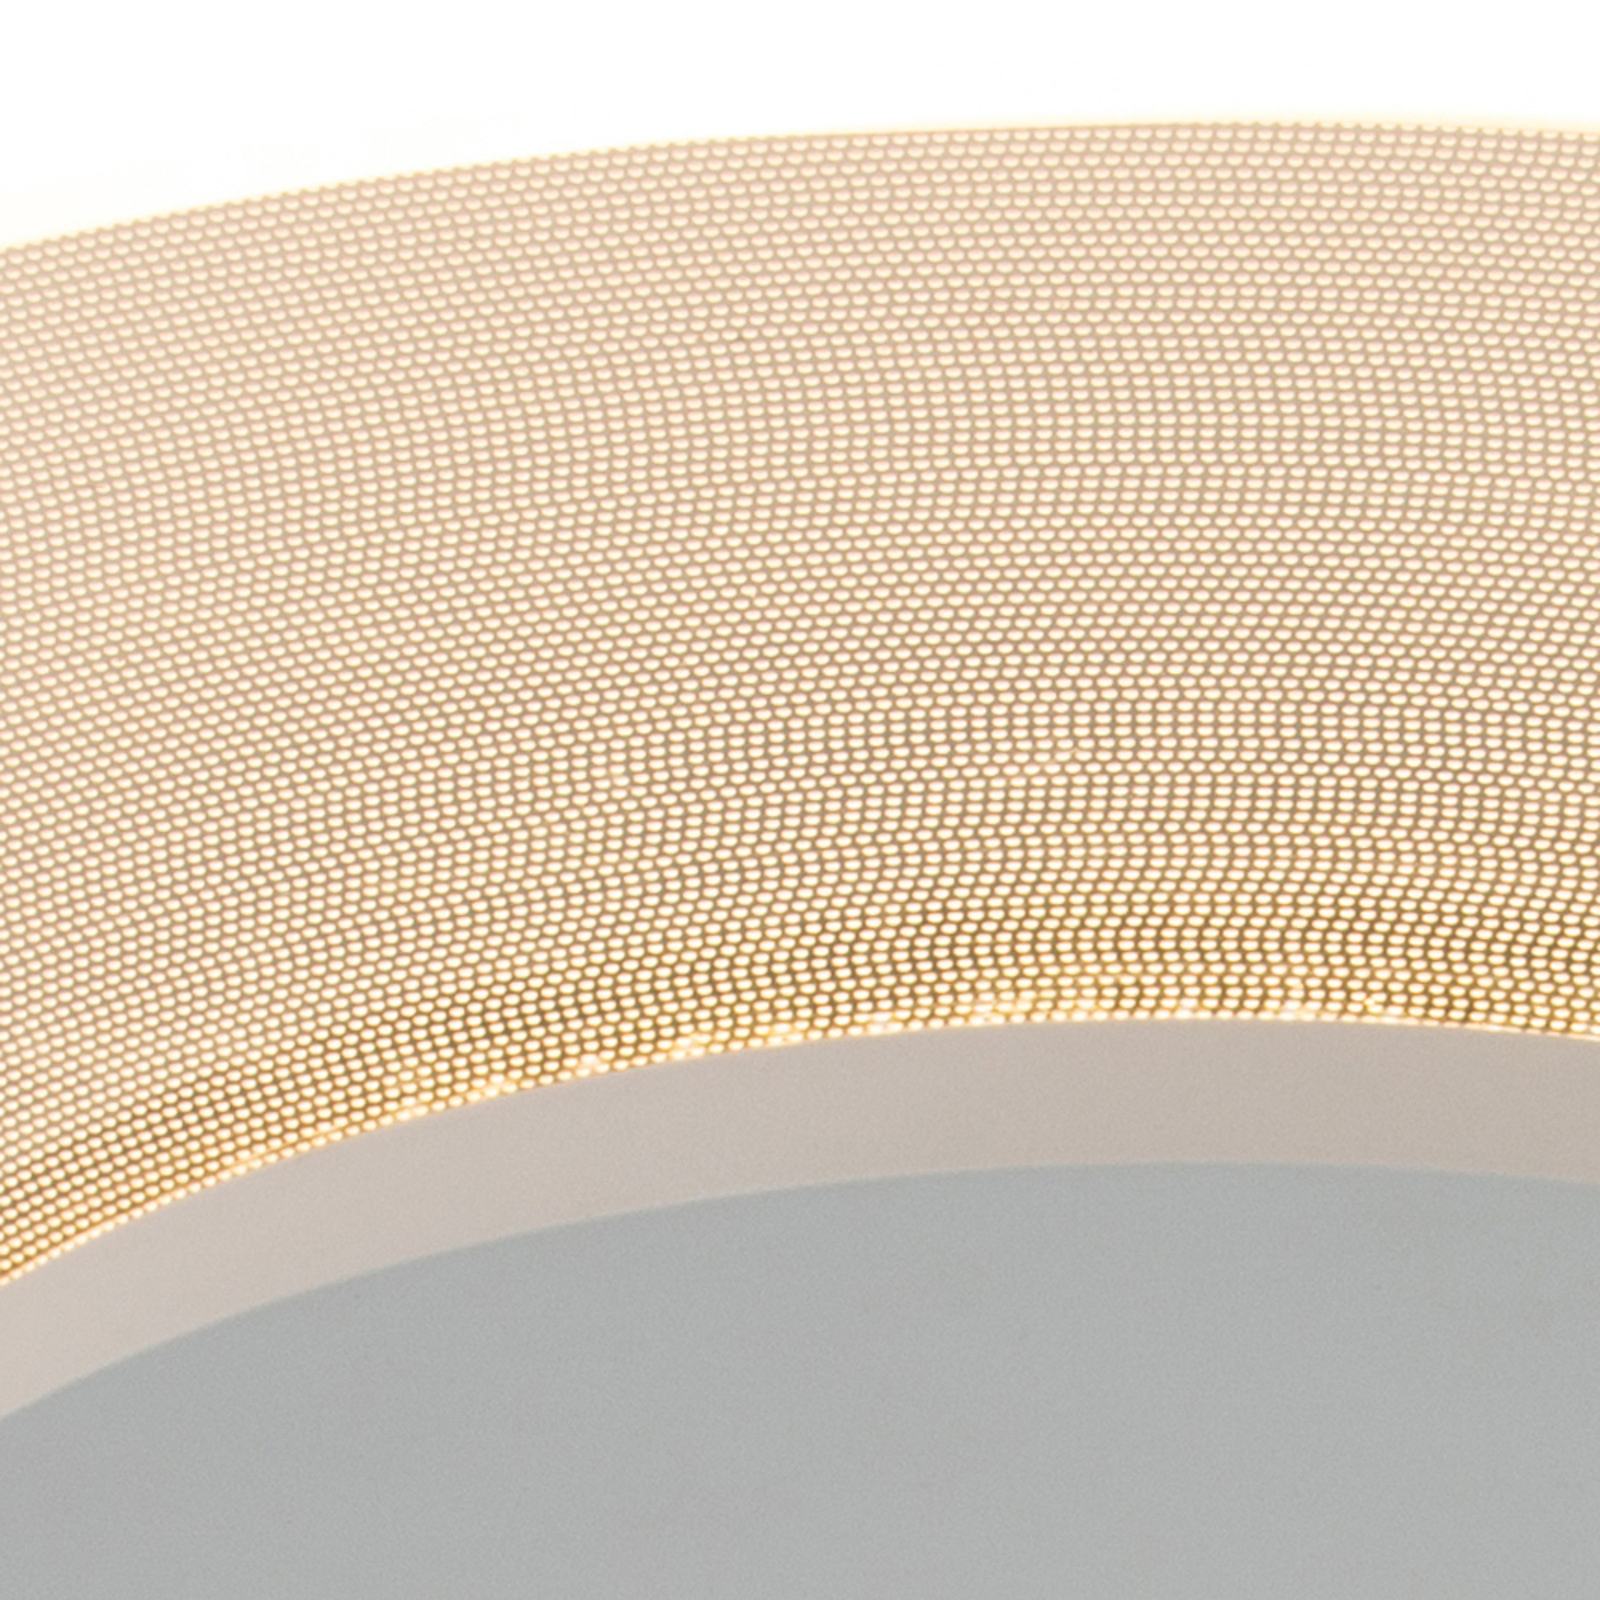 LED plafondlamp Lido, wit, Ø 36cm